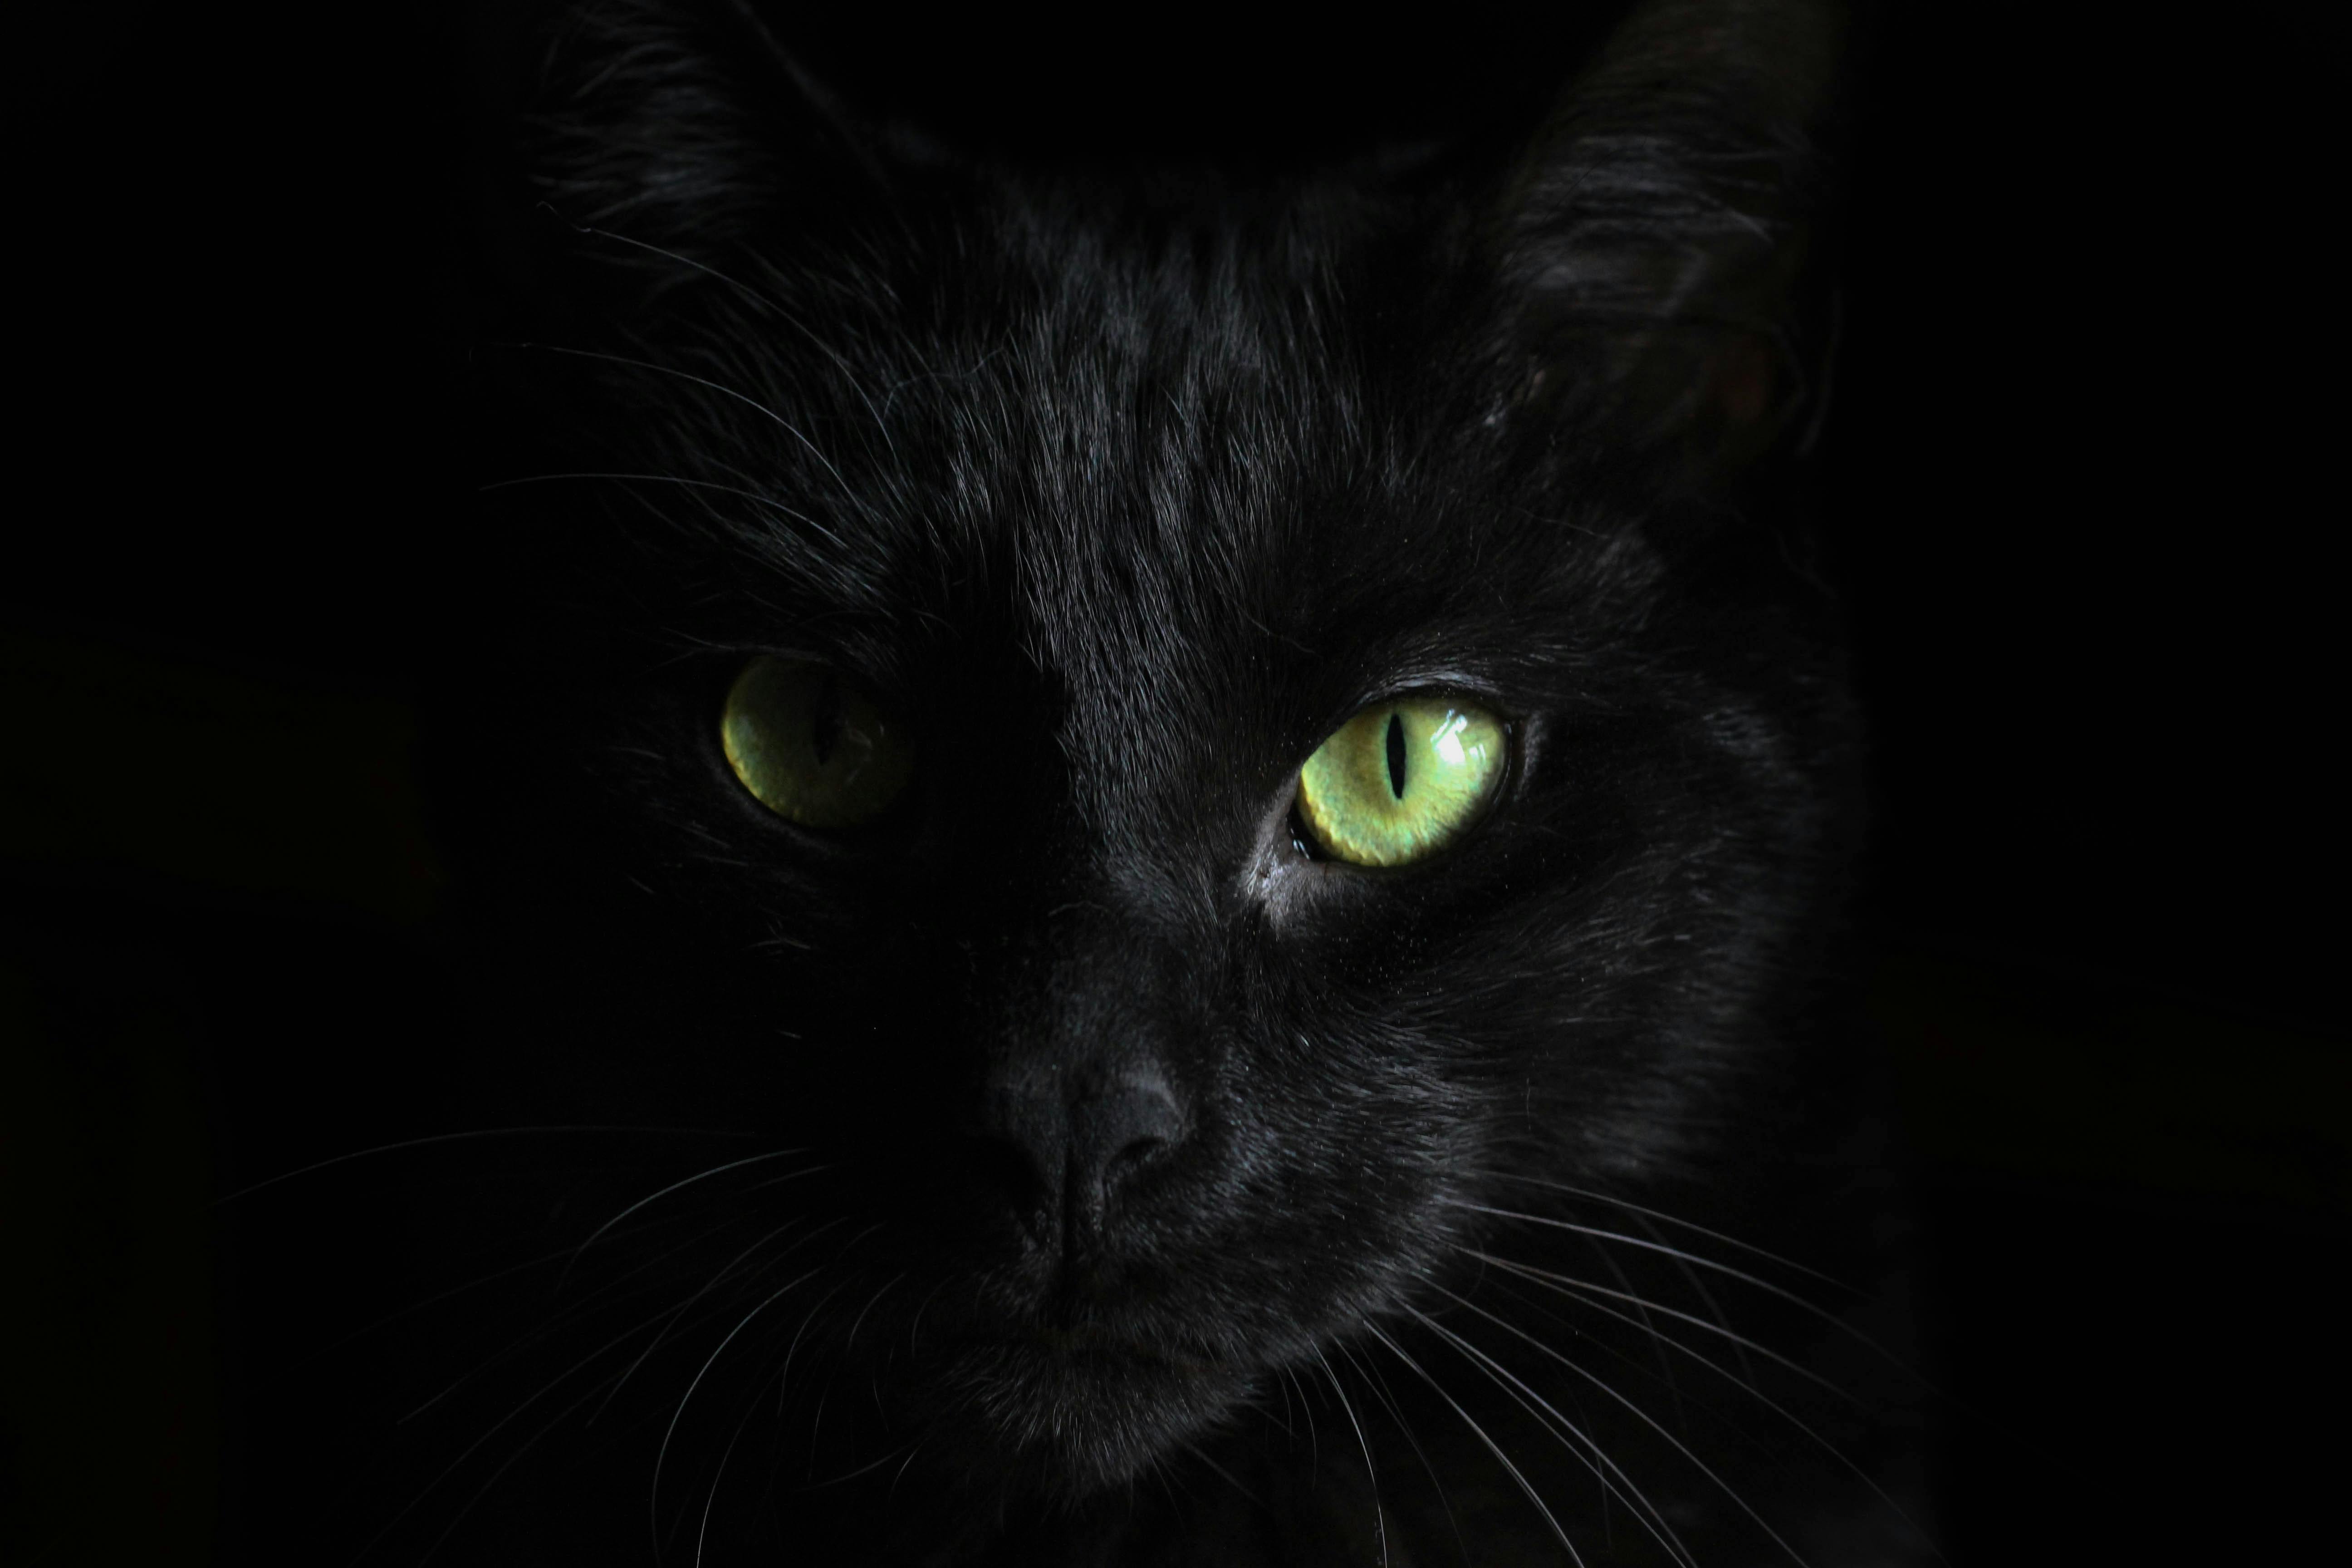 Close up of black cat face against black background.